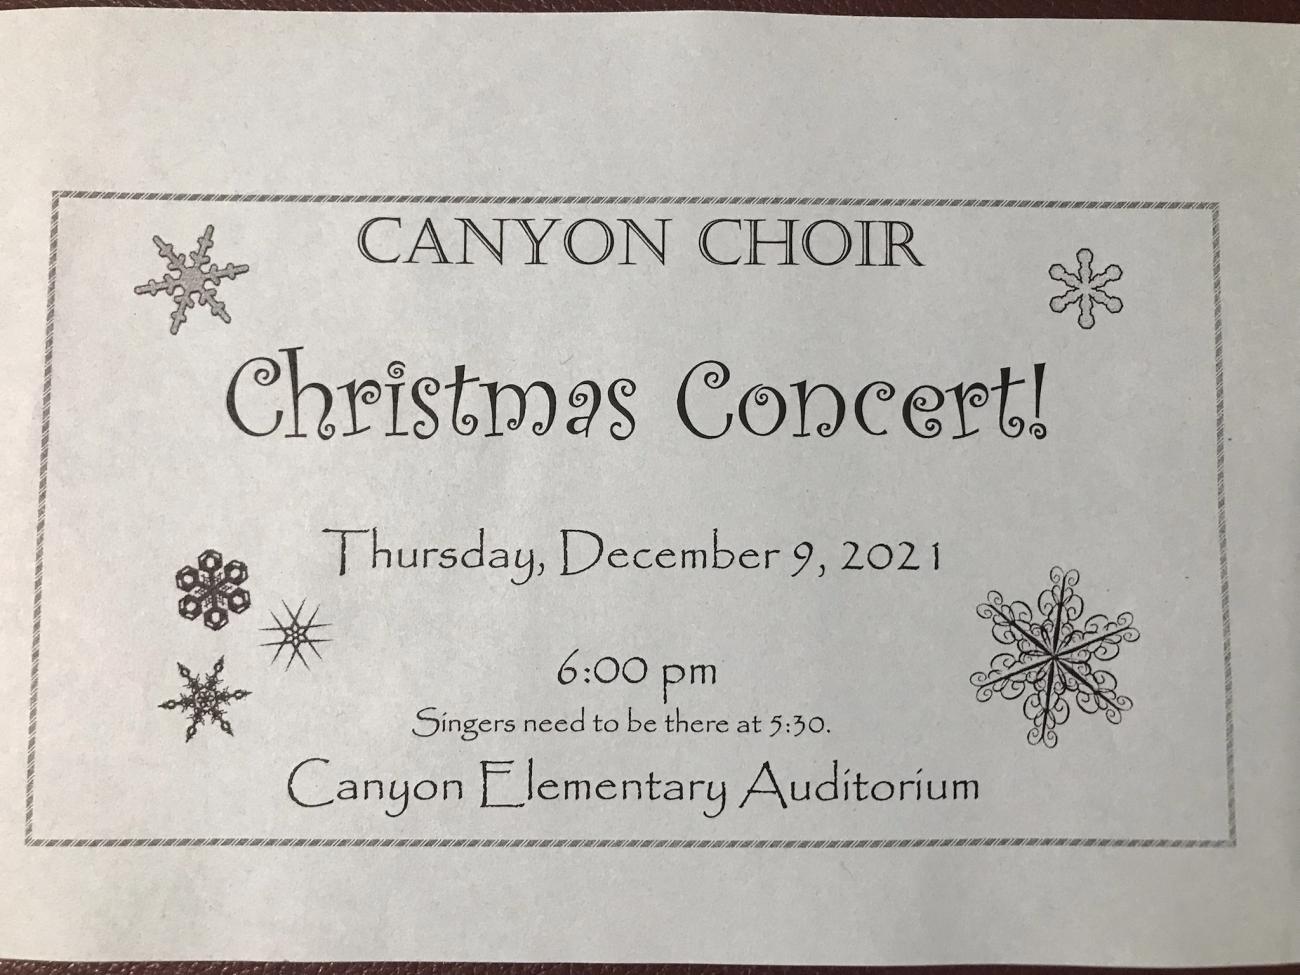 Canyon Choir Christmas Concert! | Canyon Elementary